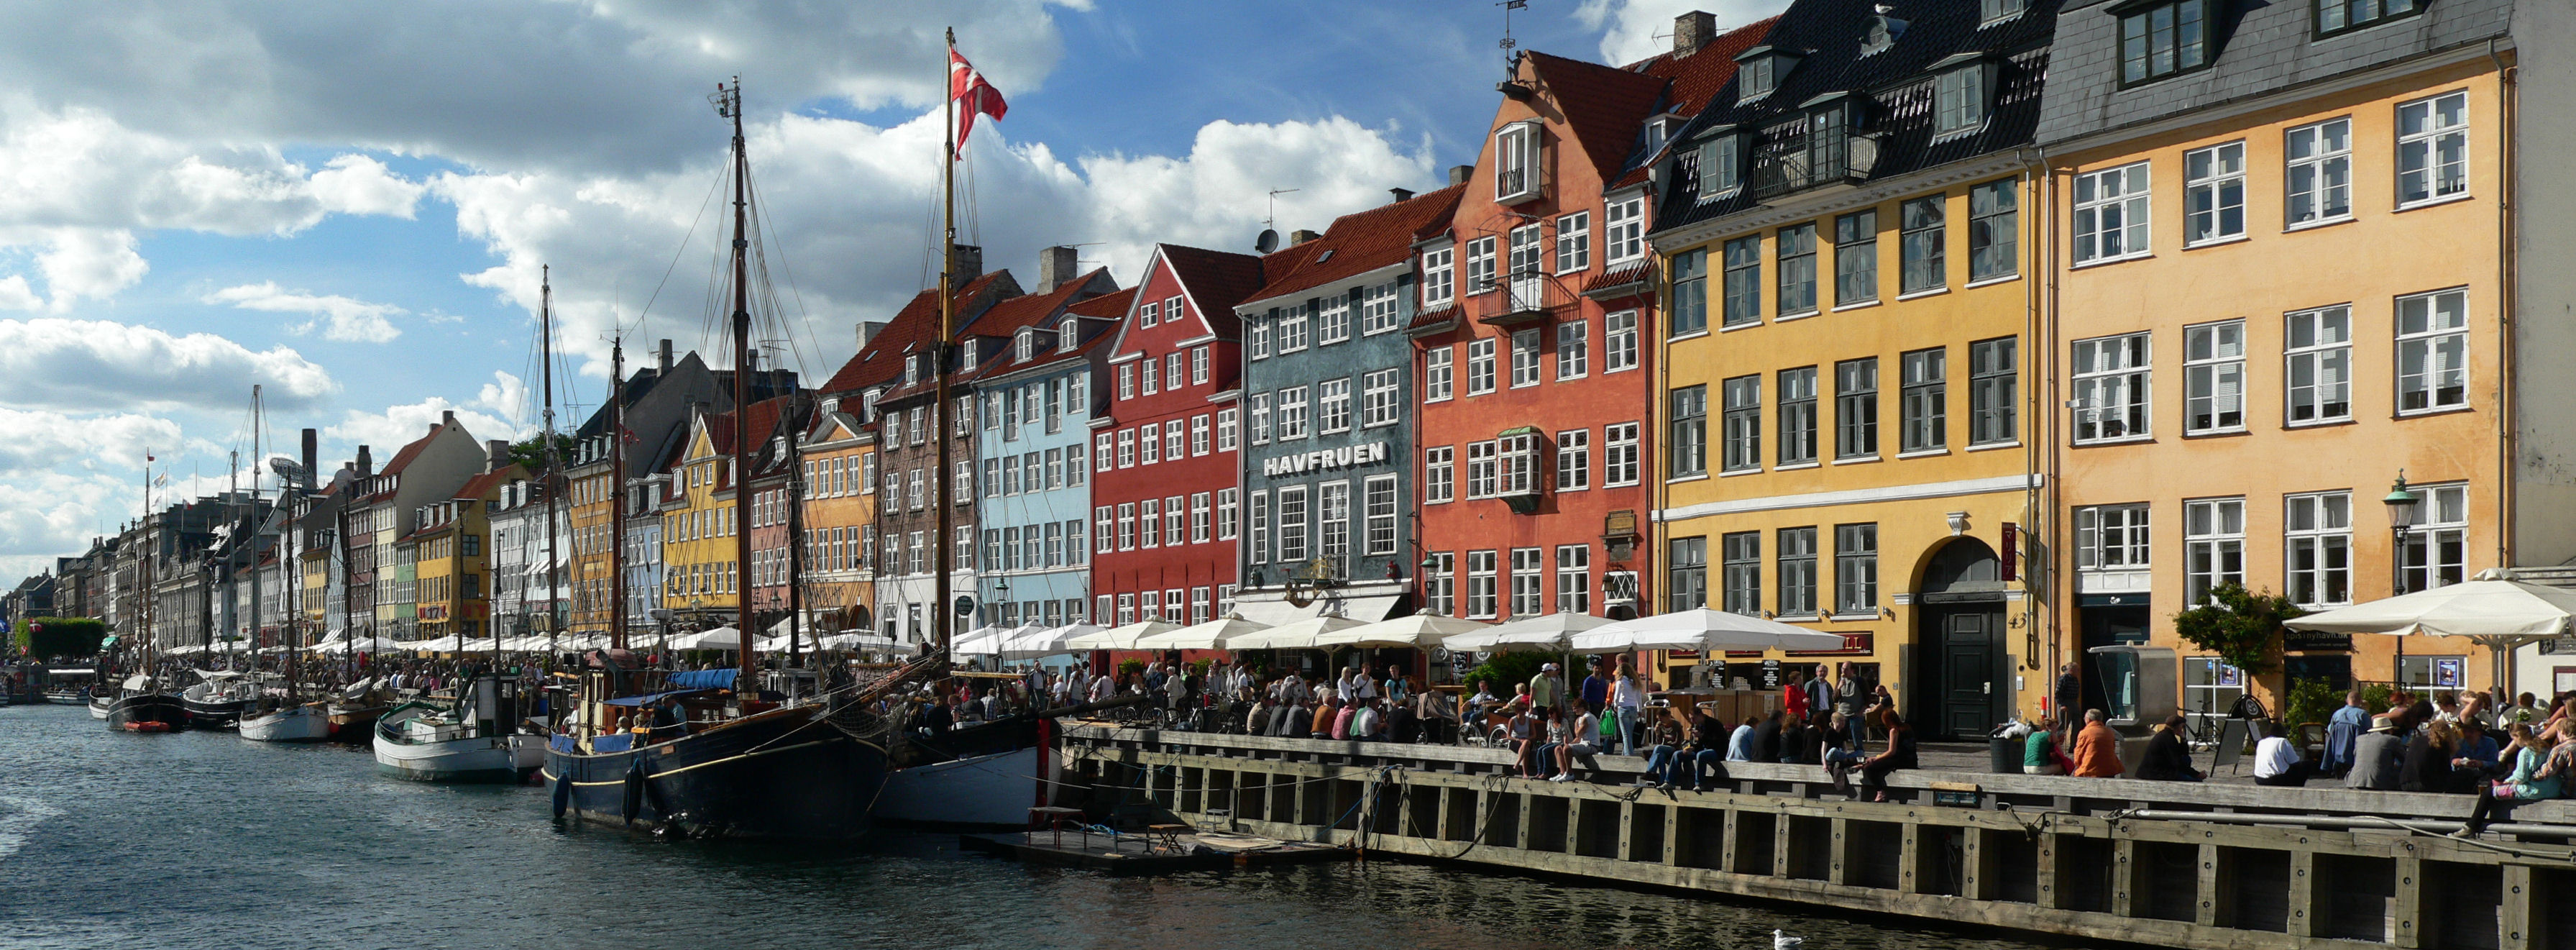 Nyhavn, Wikimedia Commons, Travels, Copenhagen, 3590x1330 Dual Screen Desktop